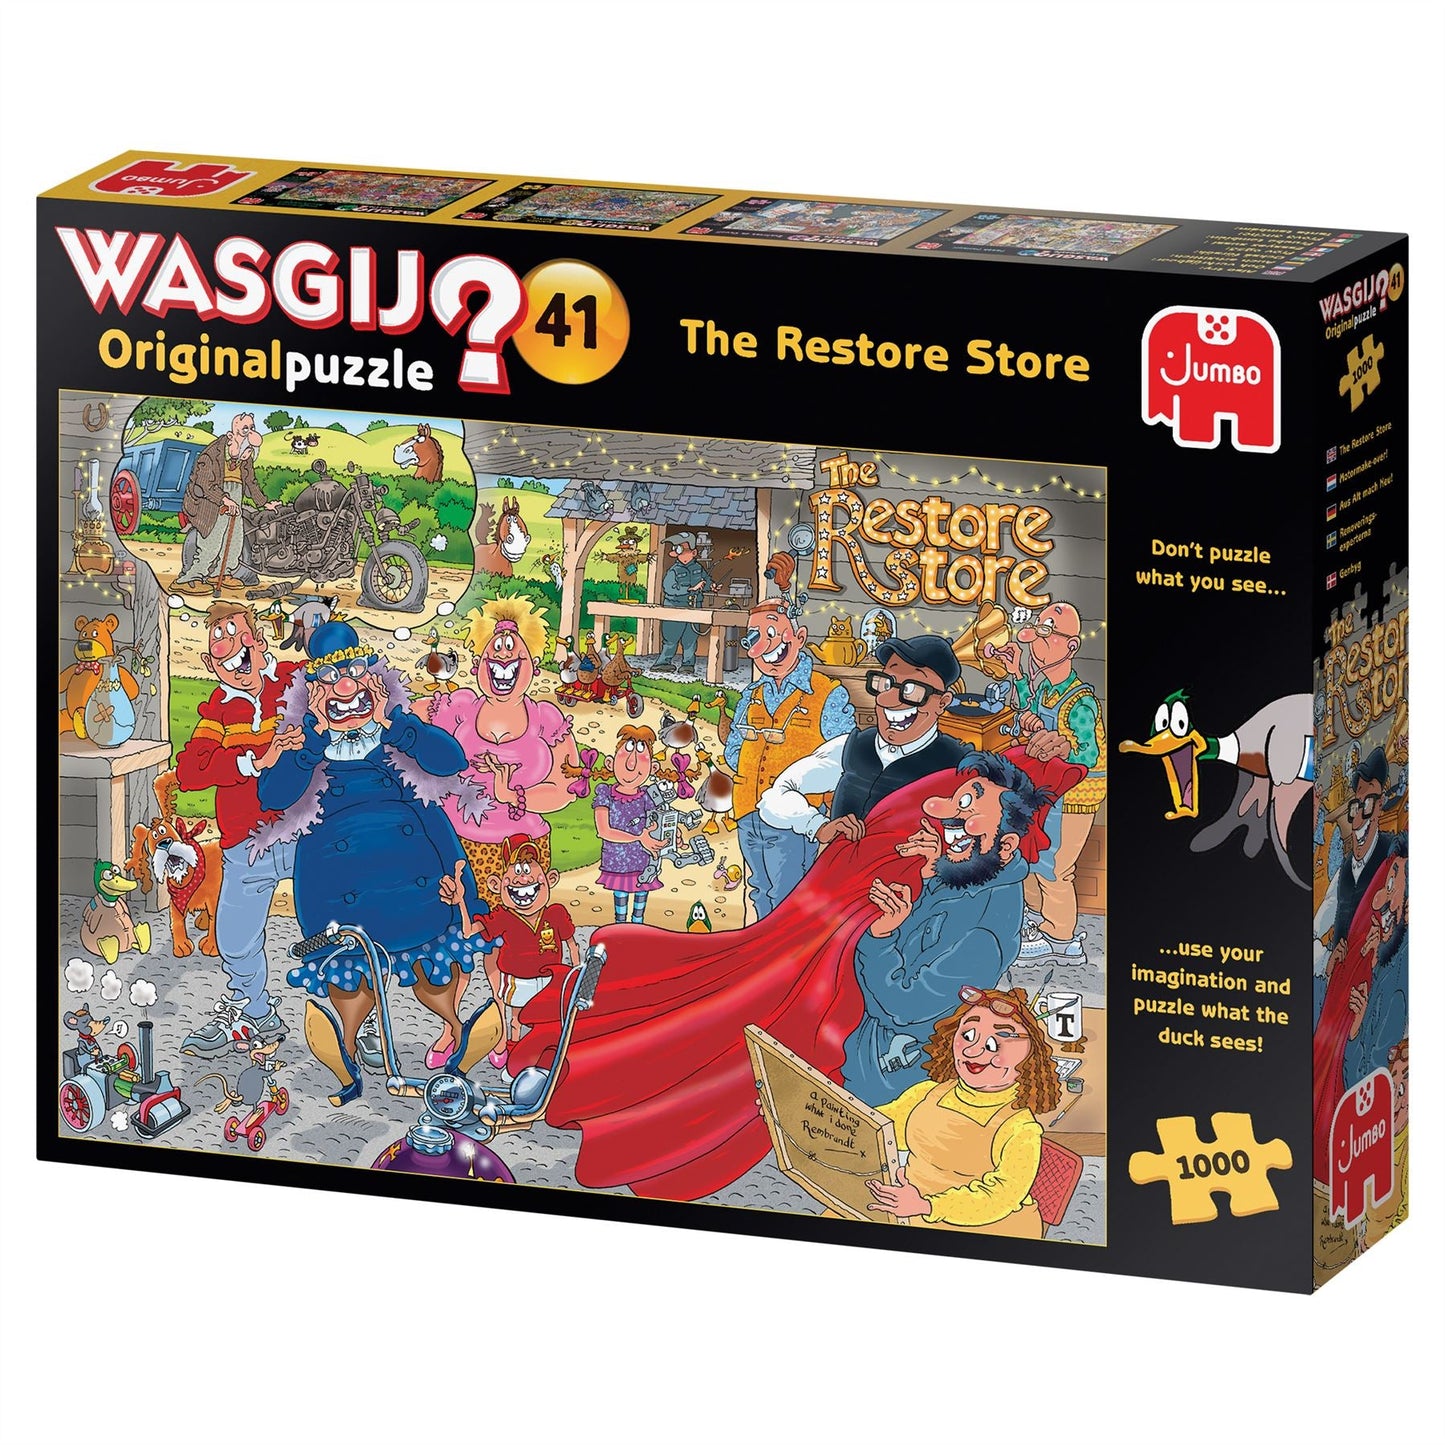 Wasgij Original 41 The Restore Store! 1000 Piece Jigsaw Puzzle box 2